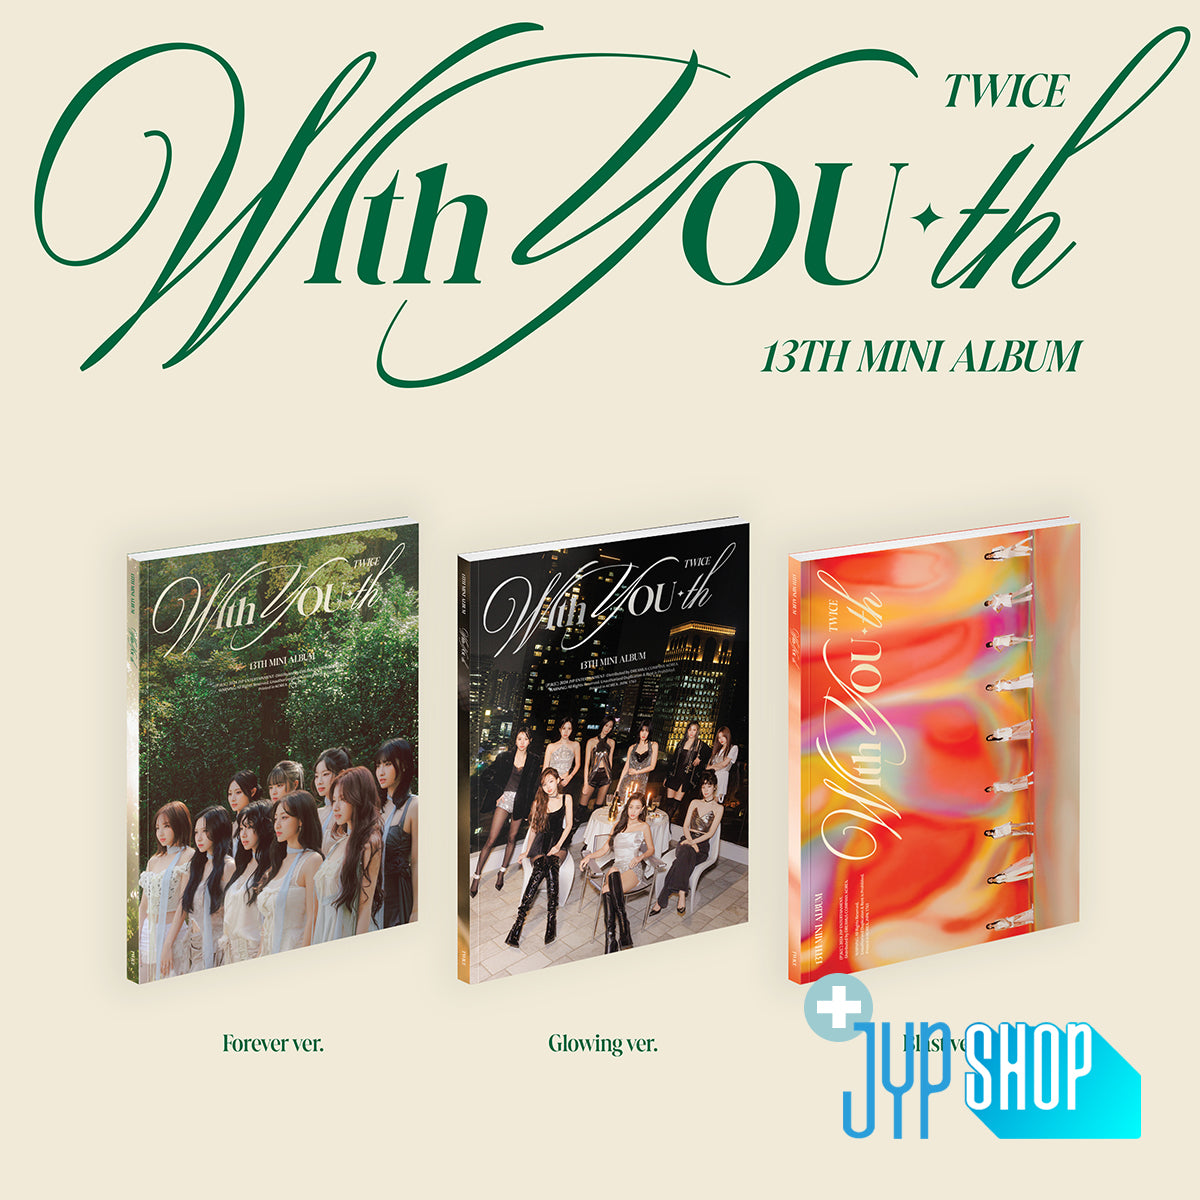 TWICE - With YOU-th + JYP SHOP P.O.B